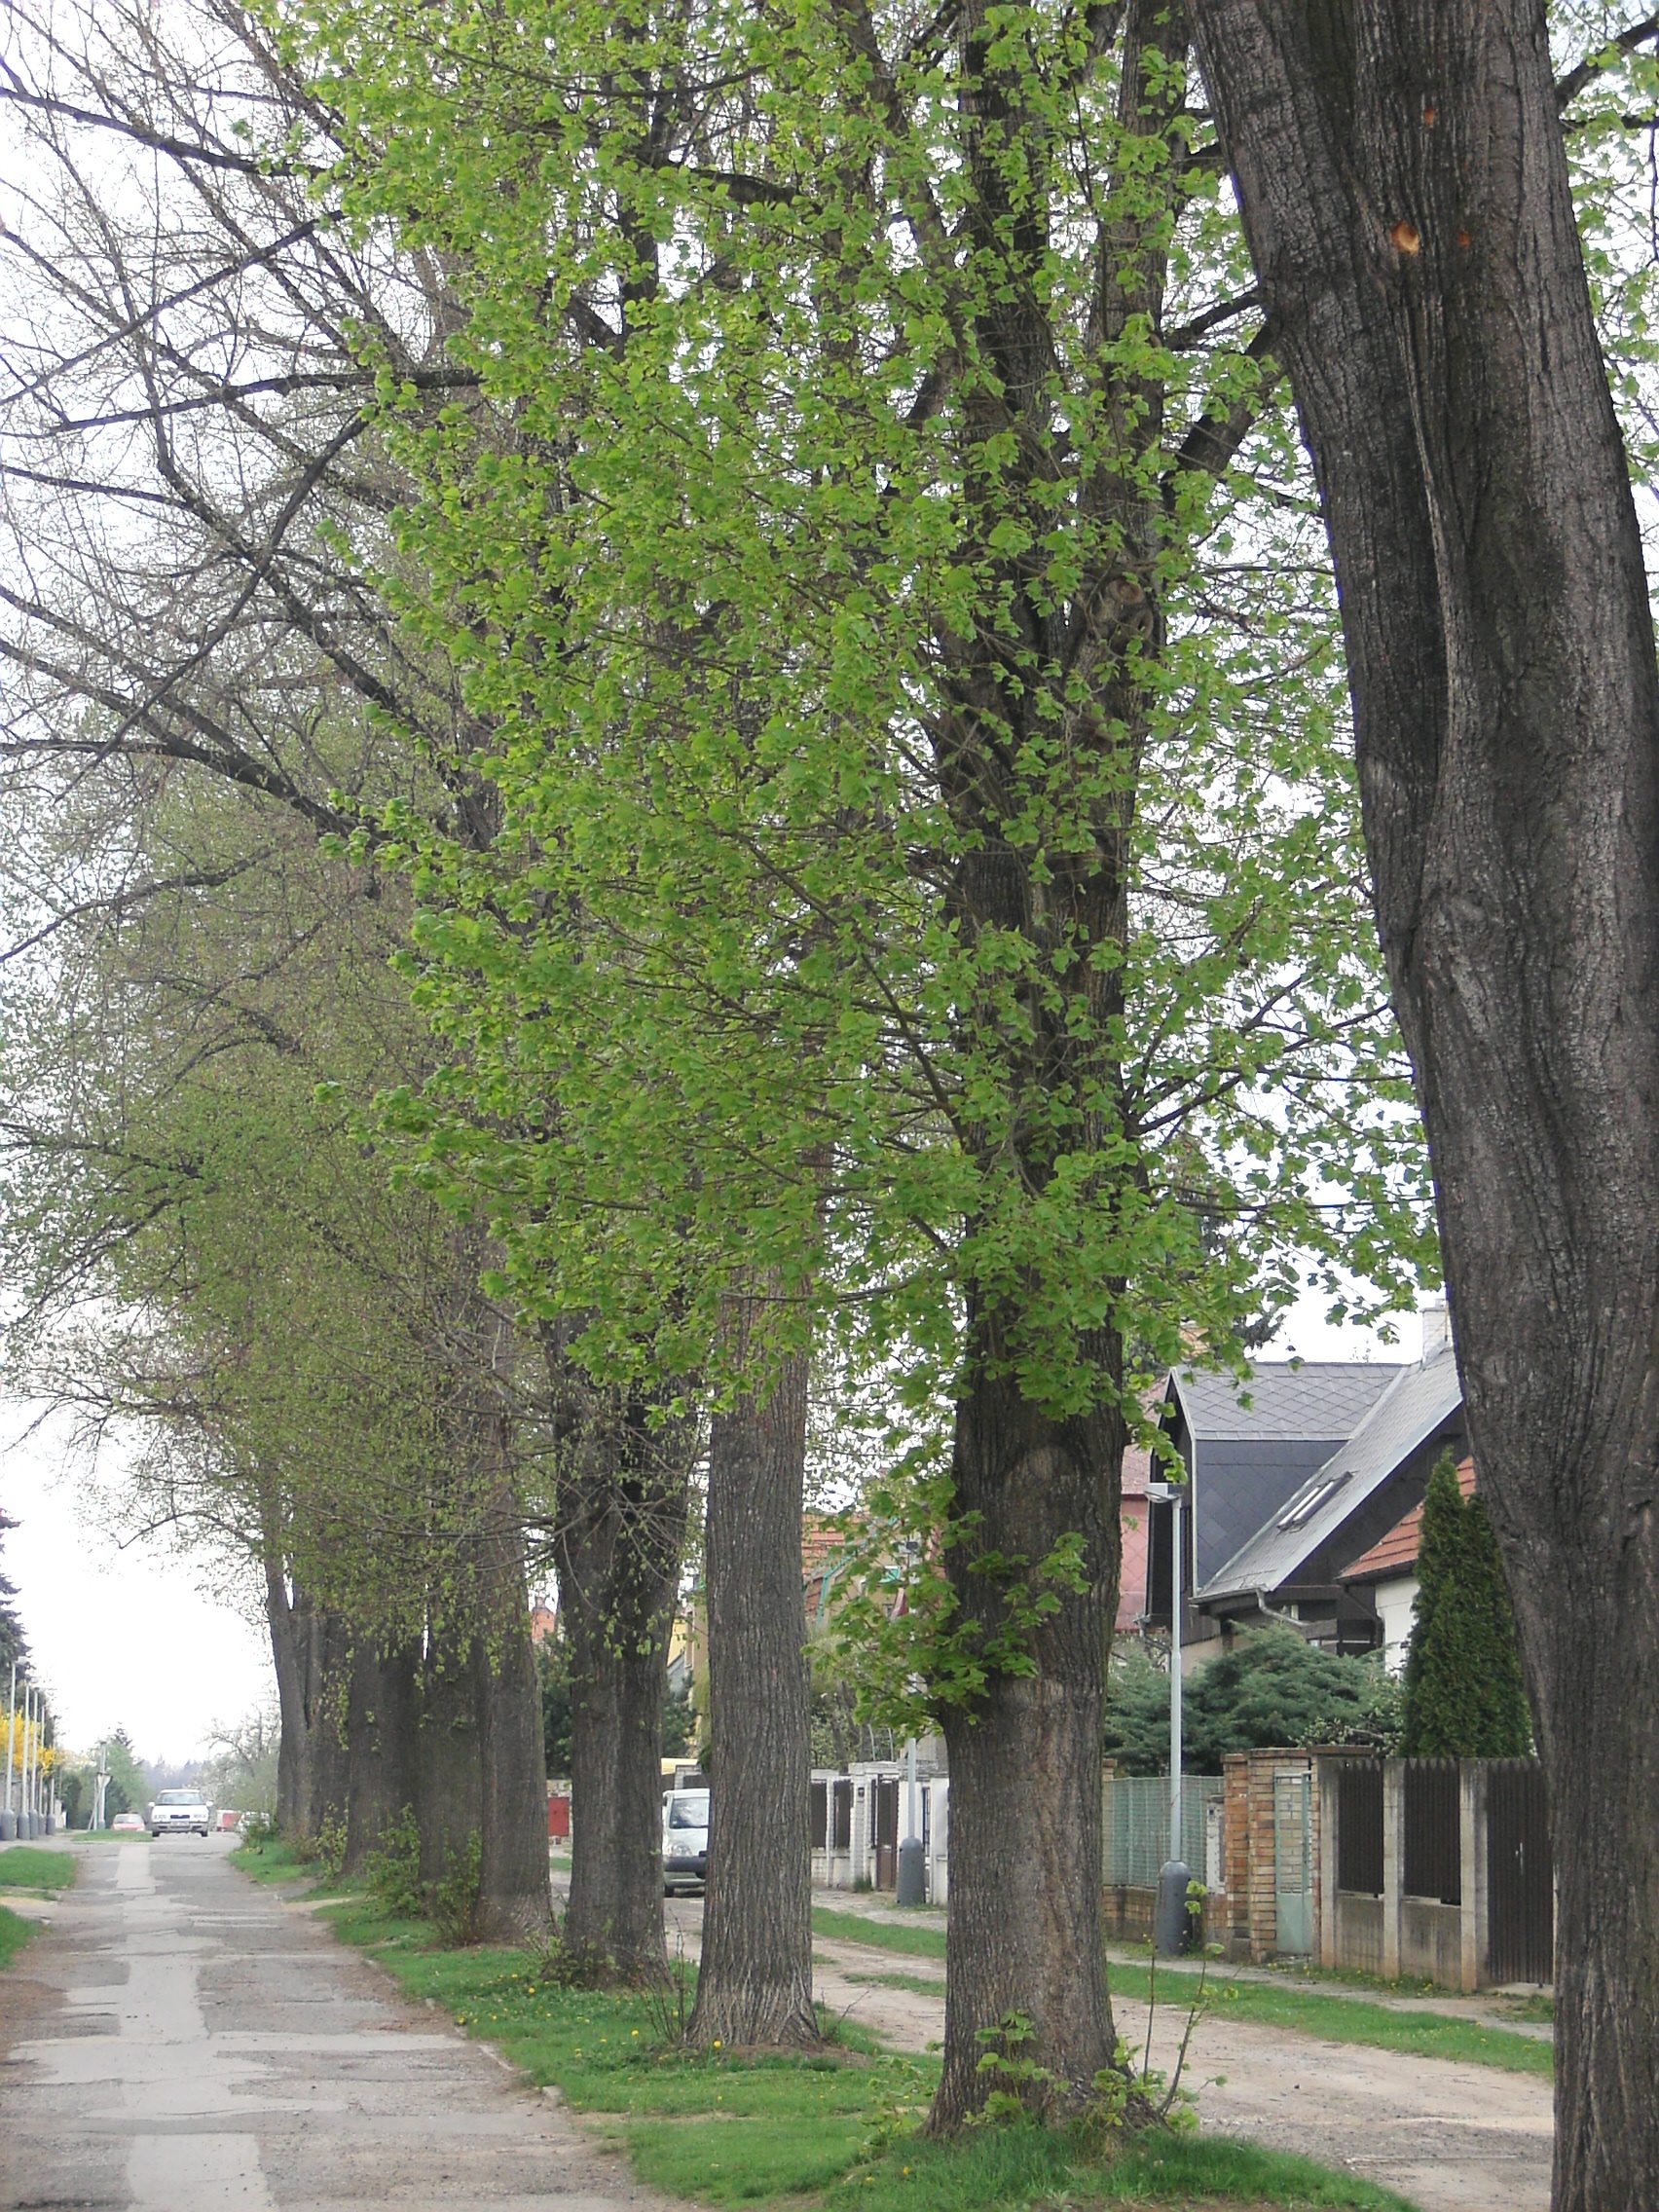 Stromořadí lípy srdčité v ul.  Gagarinova v Suchdole, ilustr. foto, trasa č.9 Za památnými stromy